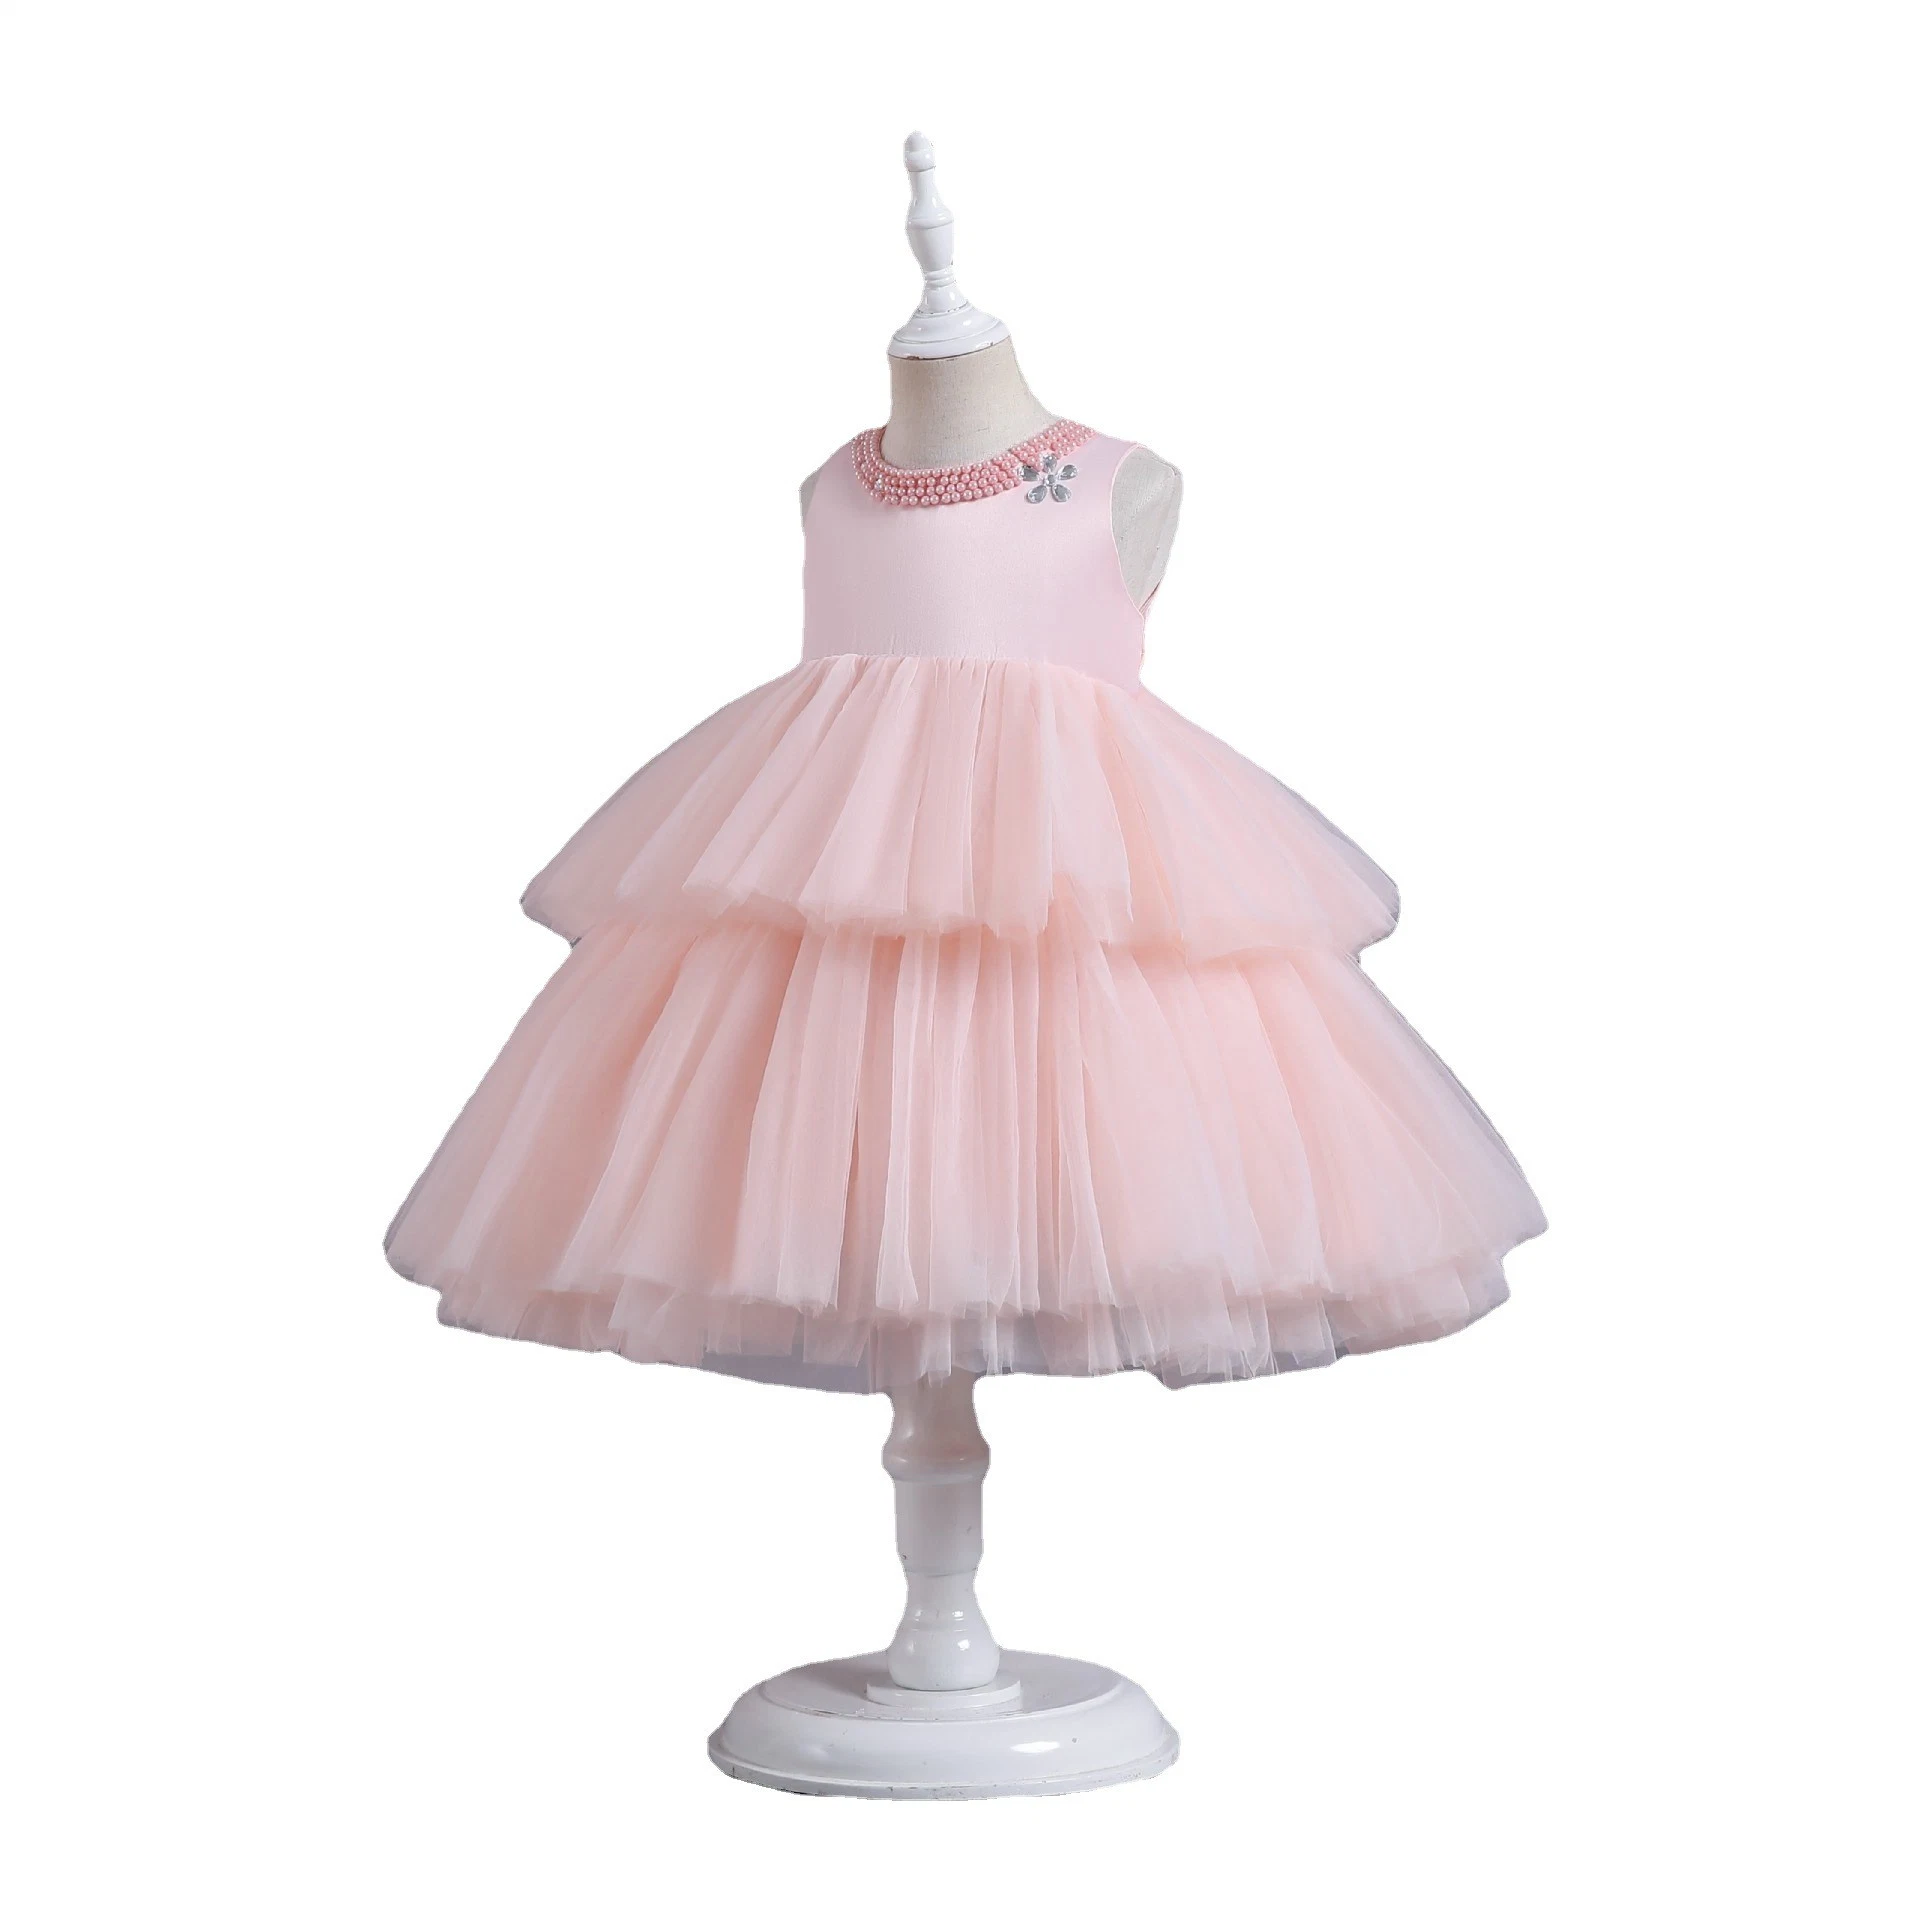 Baby Girls Frock Princess Tulle Layered Flower Girl Dress Children Ball Gown